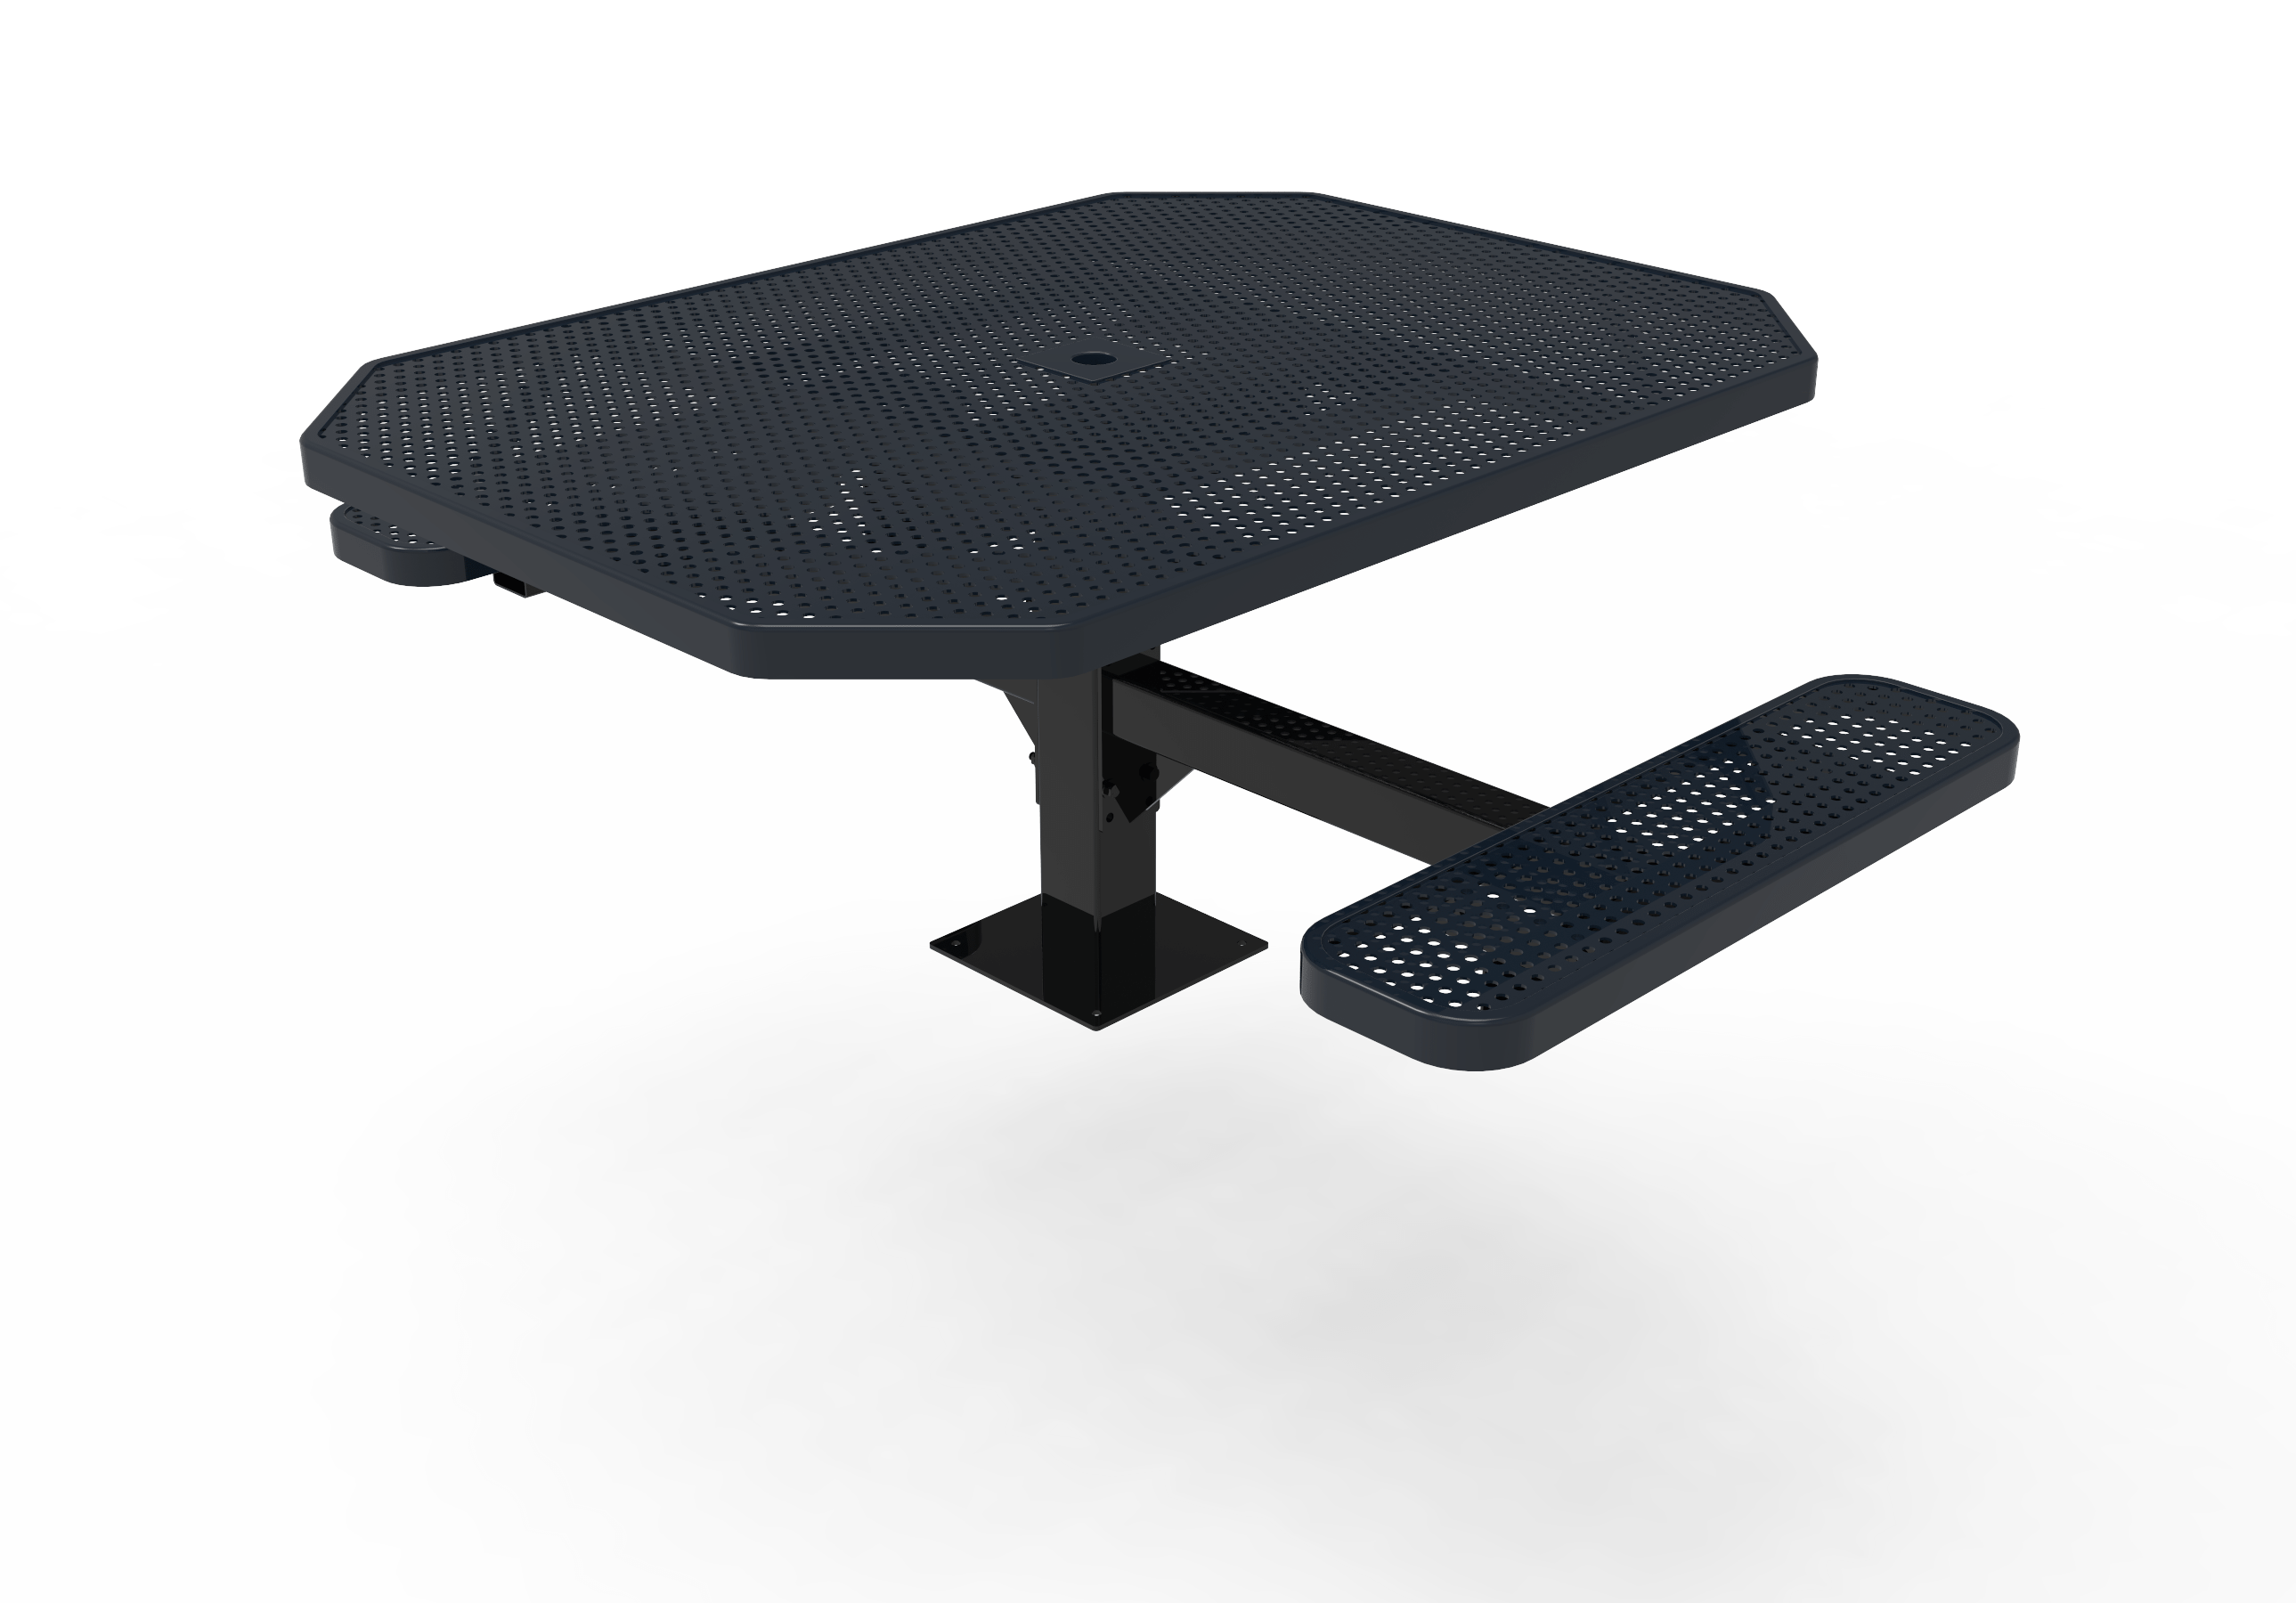 46″ Octagon Top Pedestal Surface Table 2 Seat-Punch
TOT46-D-17-012
Industry Standard Finish
$1899.00
TOT46-B-17-012
Advantage Premium Finish
$2239.00
